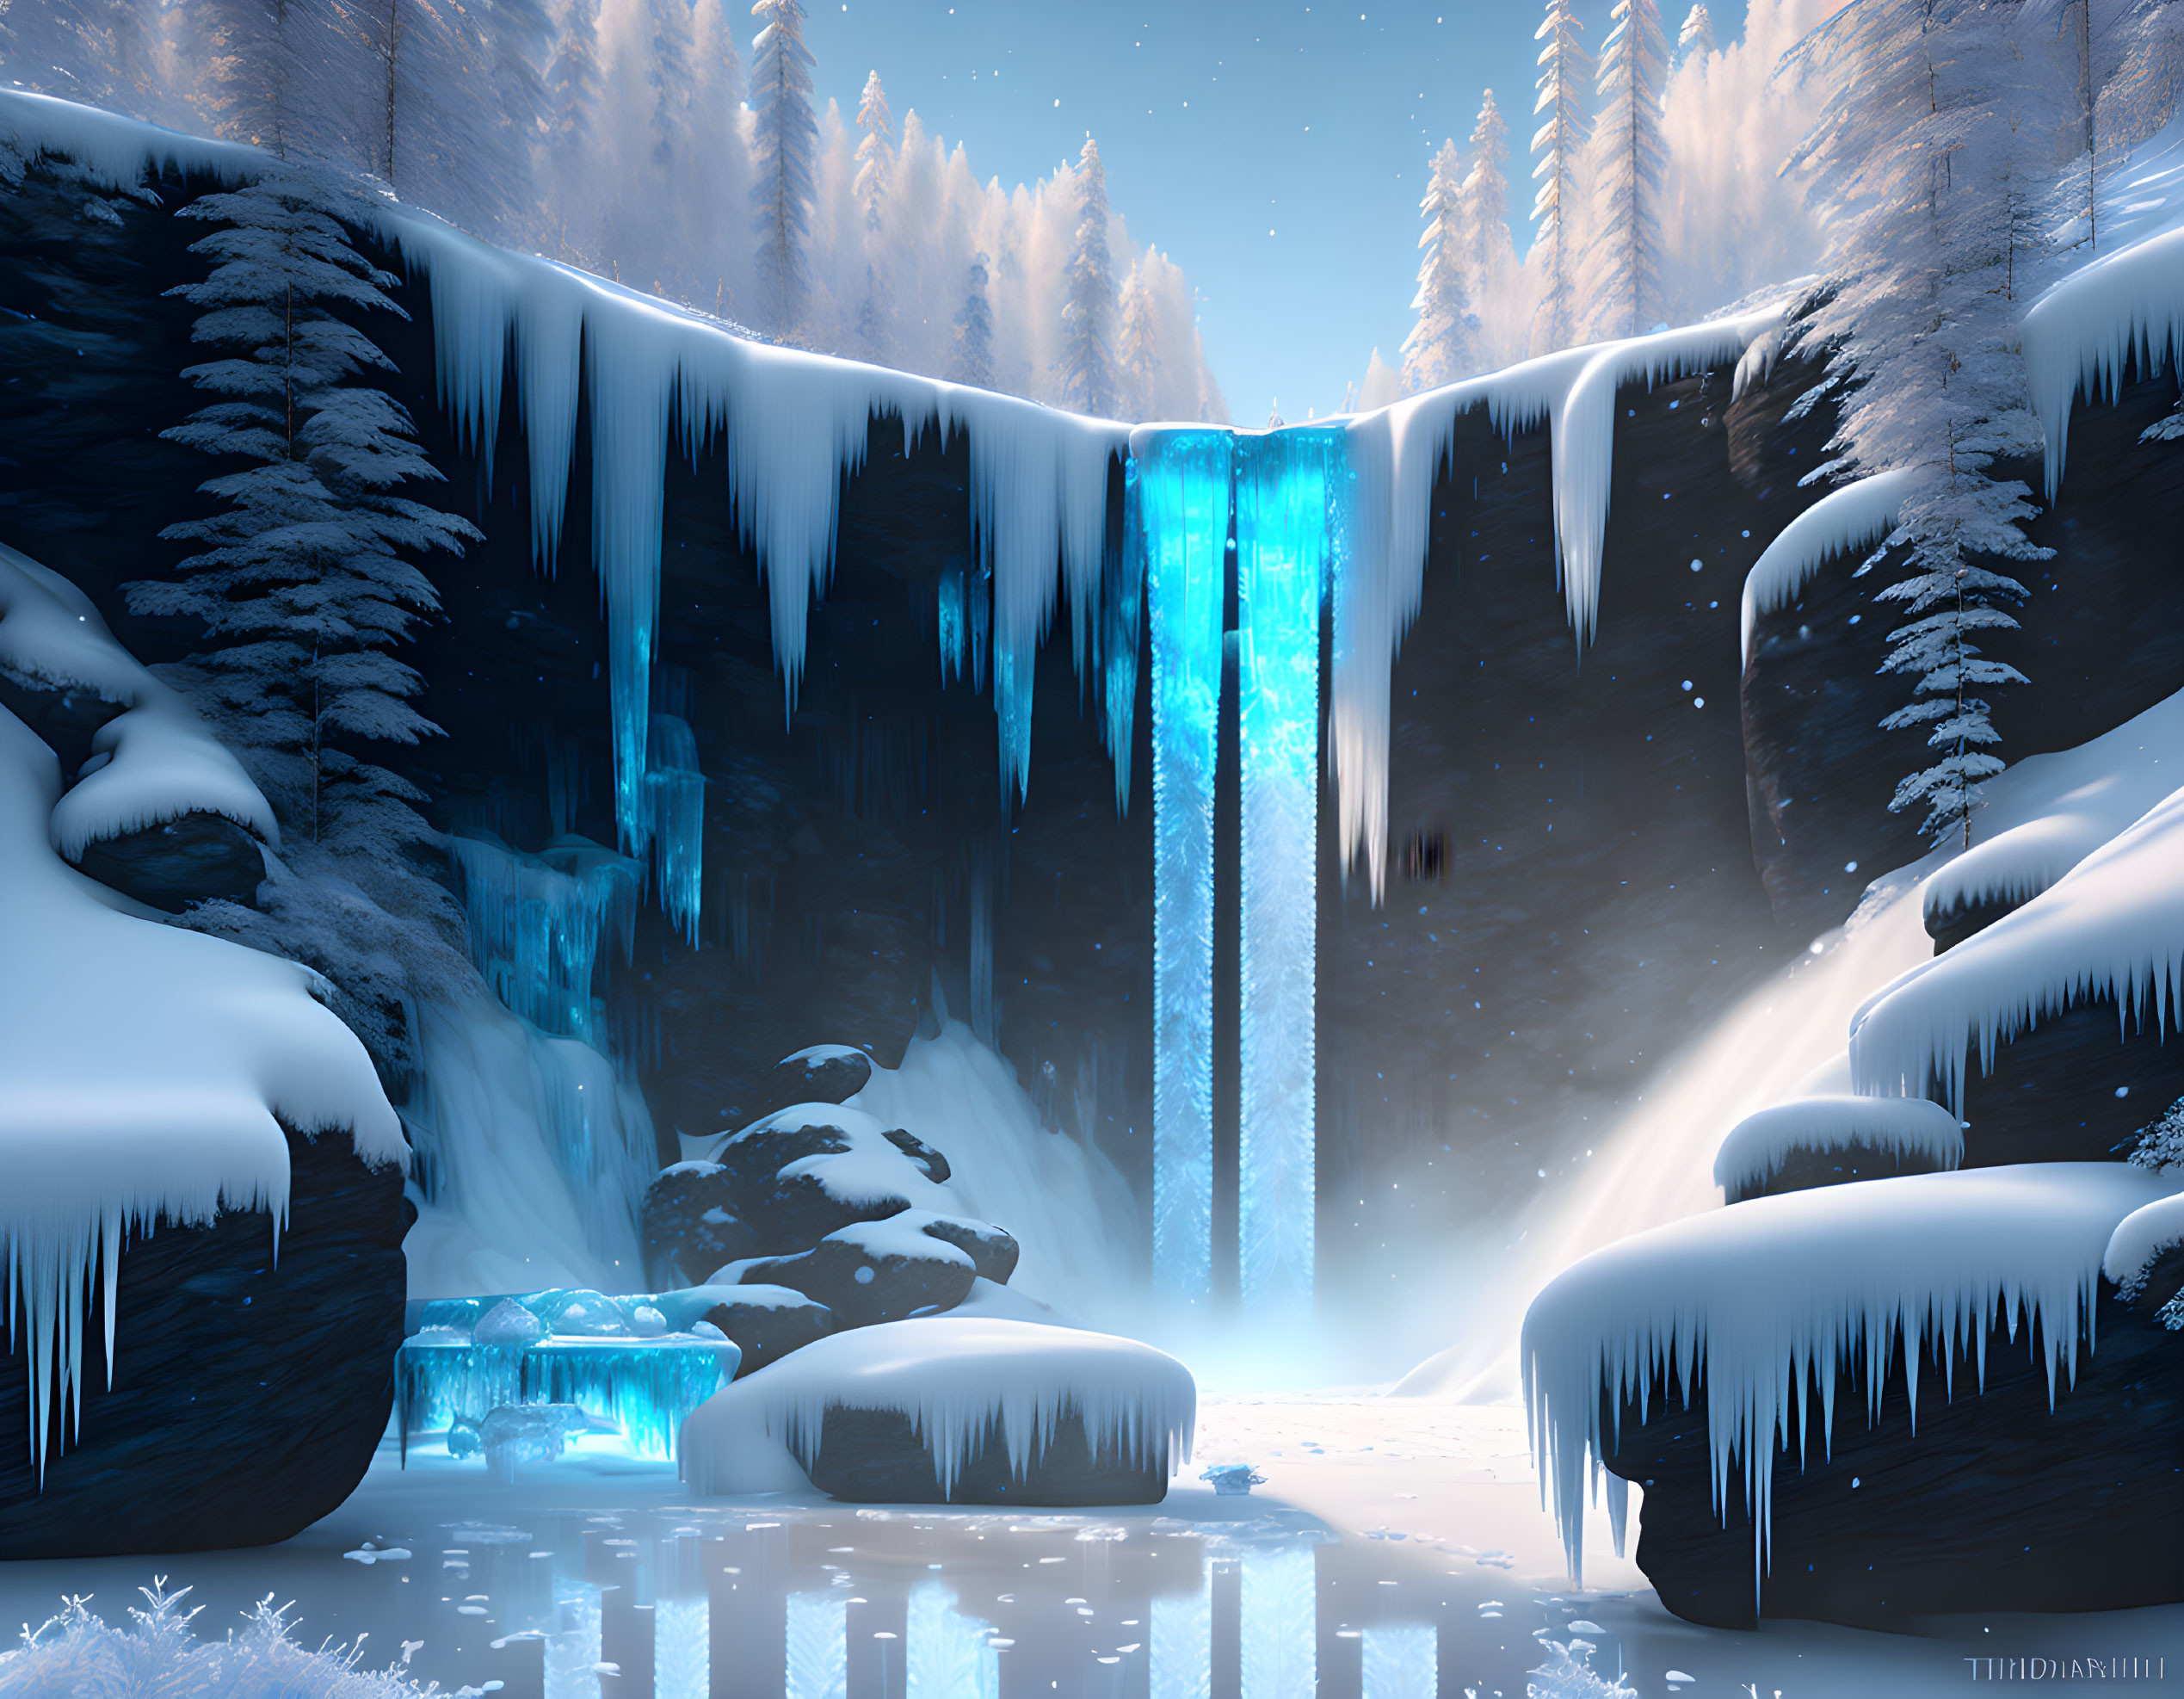 A frozen waterfall